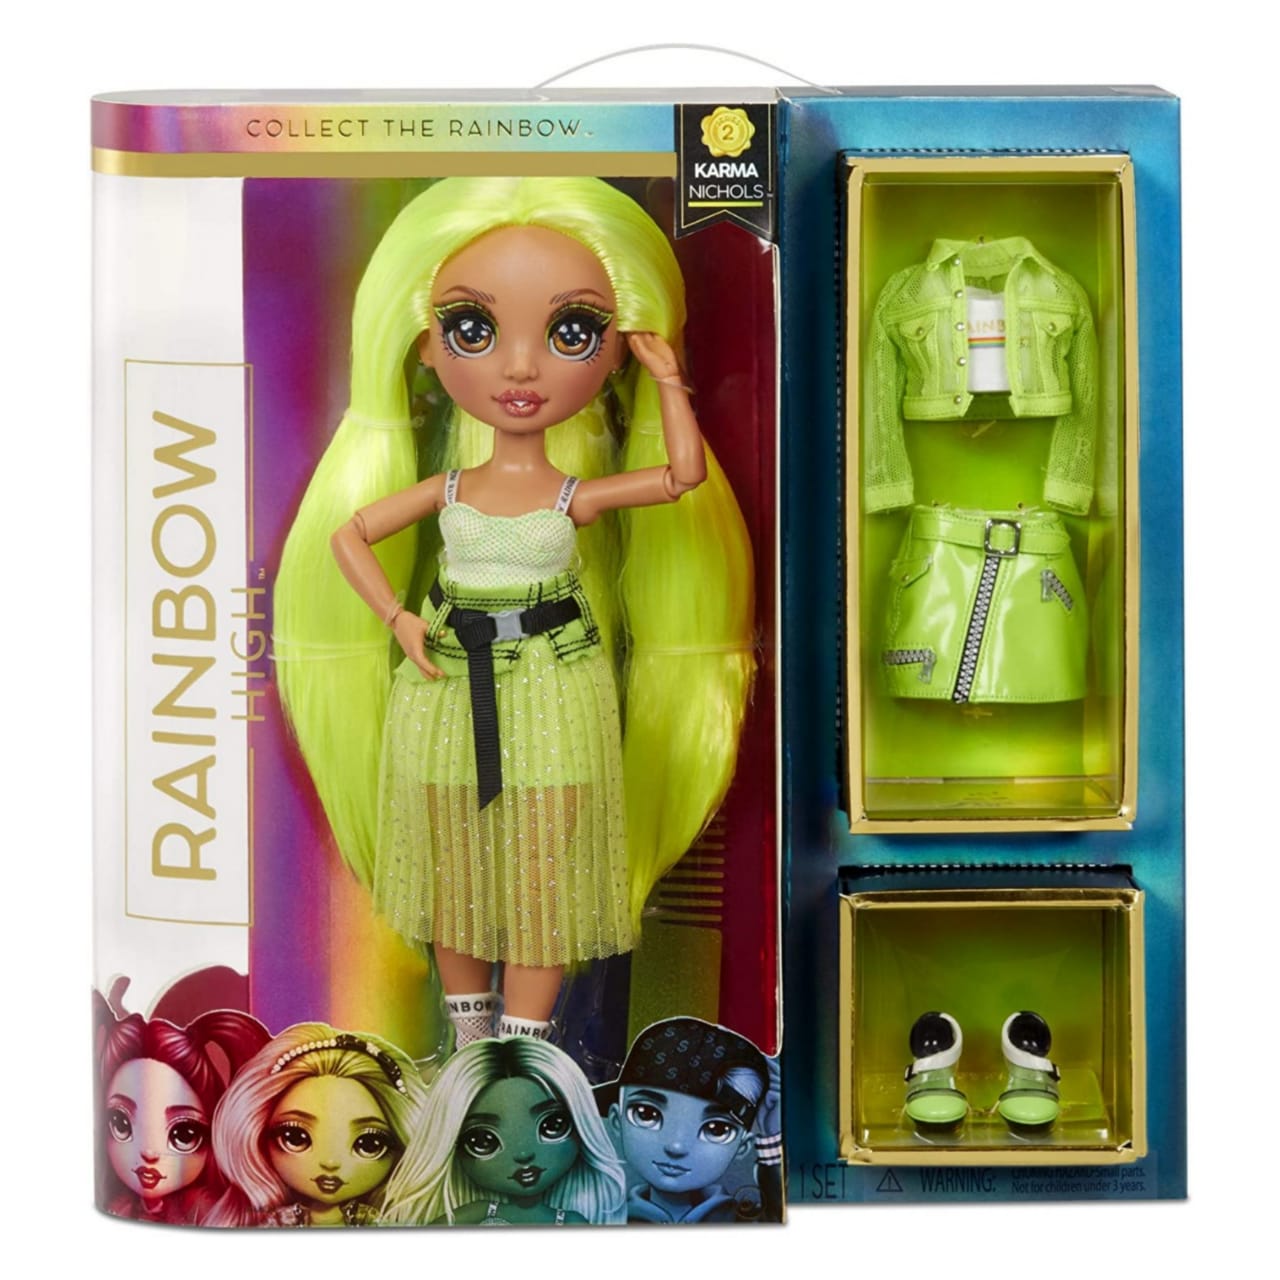 Rainbow High Hair Studio Exclusive Amaya Raine Fashion Doll 5-in-1 for  Girls Age 5